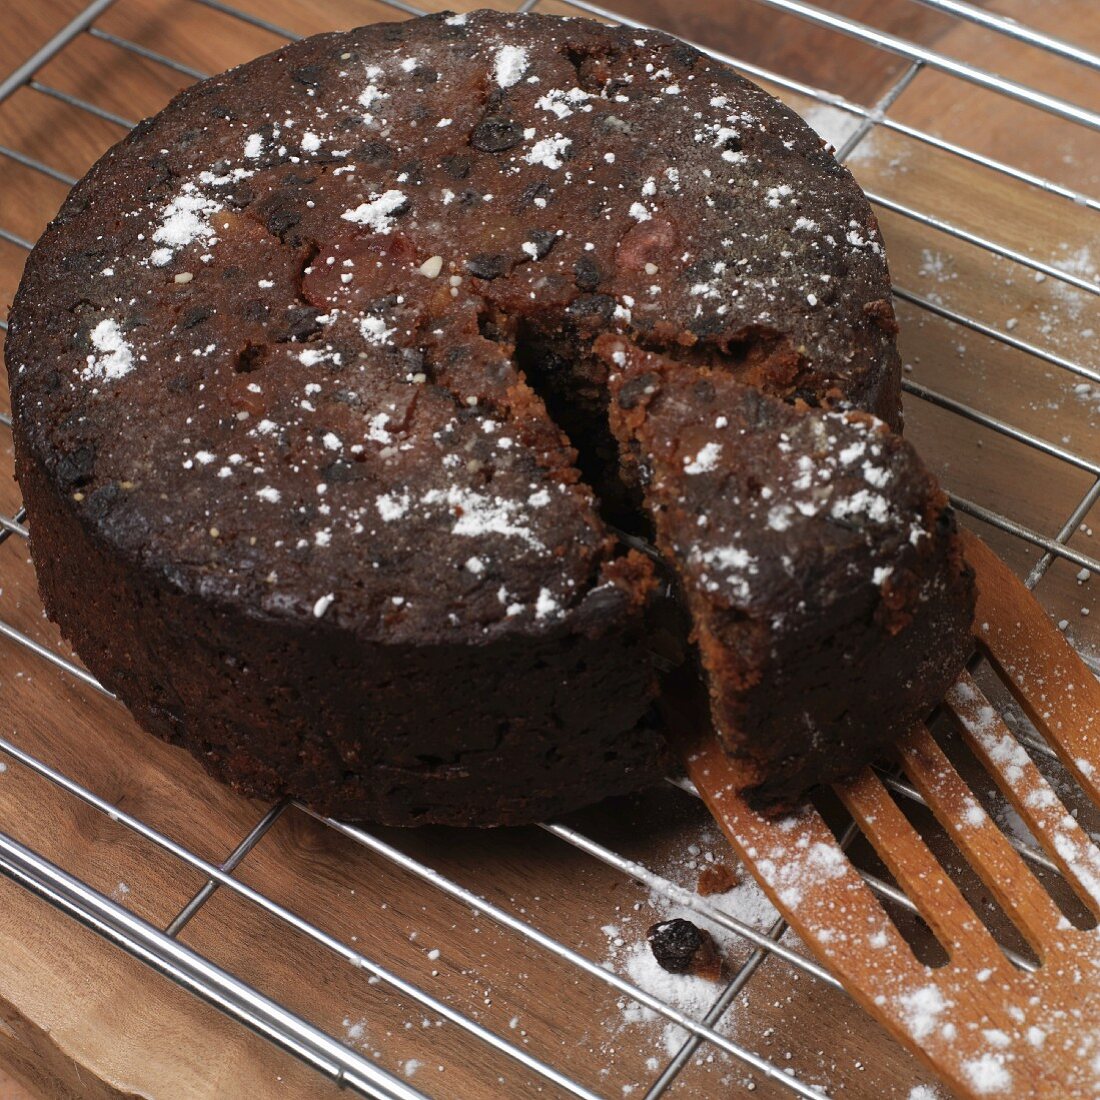 Chocolate cake, one slice cut